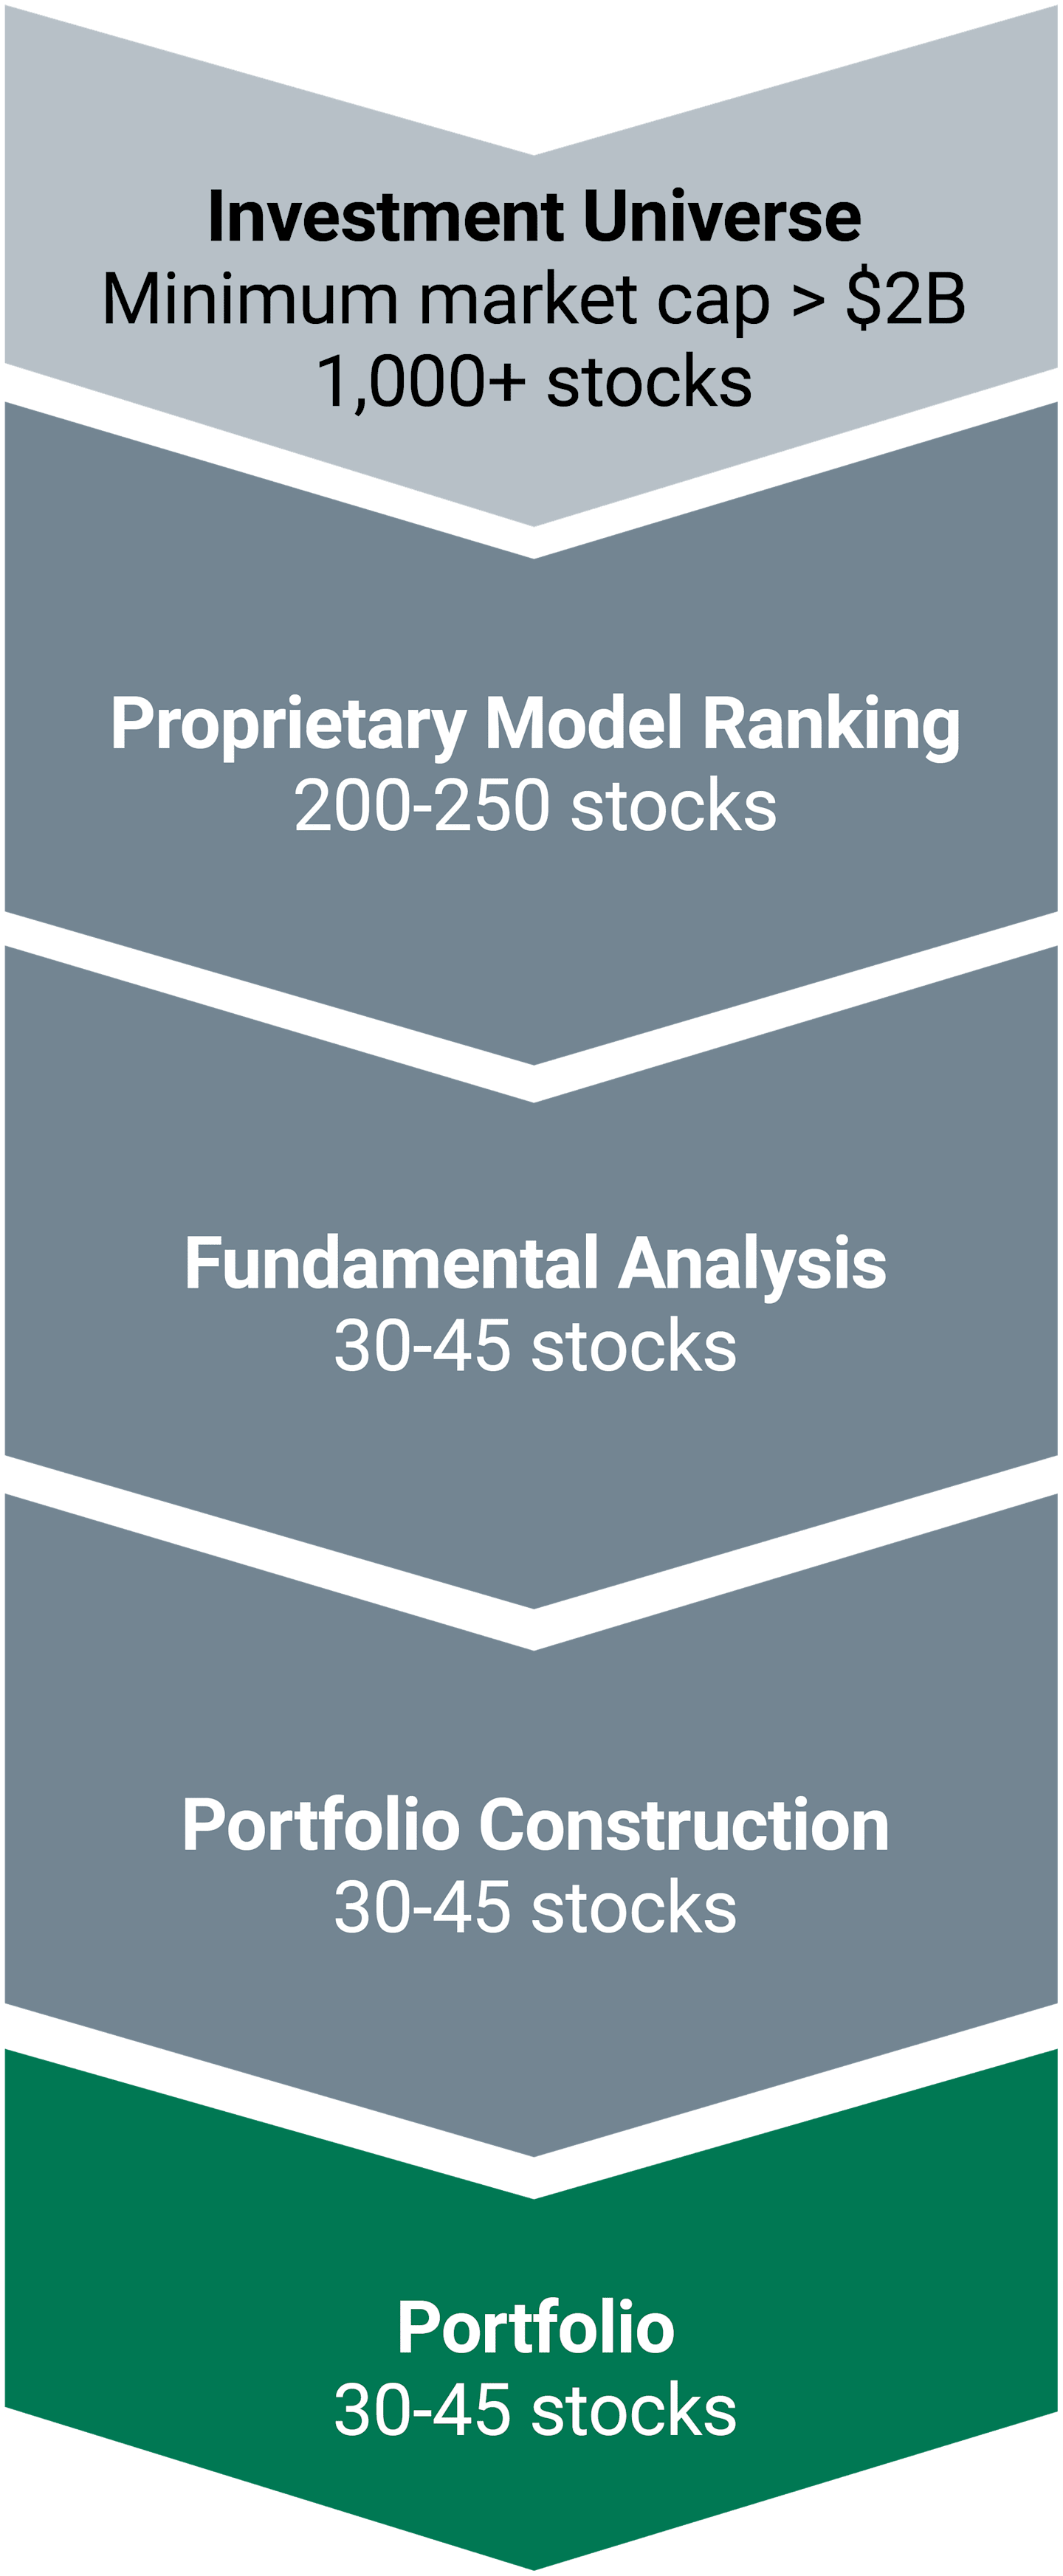 Investment Universe (Minimum market cap >$2B, 1,000-1,200 stocks); Proprietary Model Ranking (200-250 stocks); Fundamental Analysis (30-45 stocks); Portfolio Construction (30-45 stocks); Portfolio (30-45 stocks). 